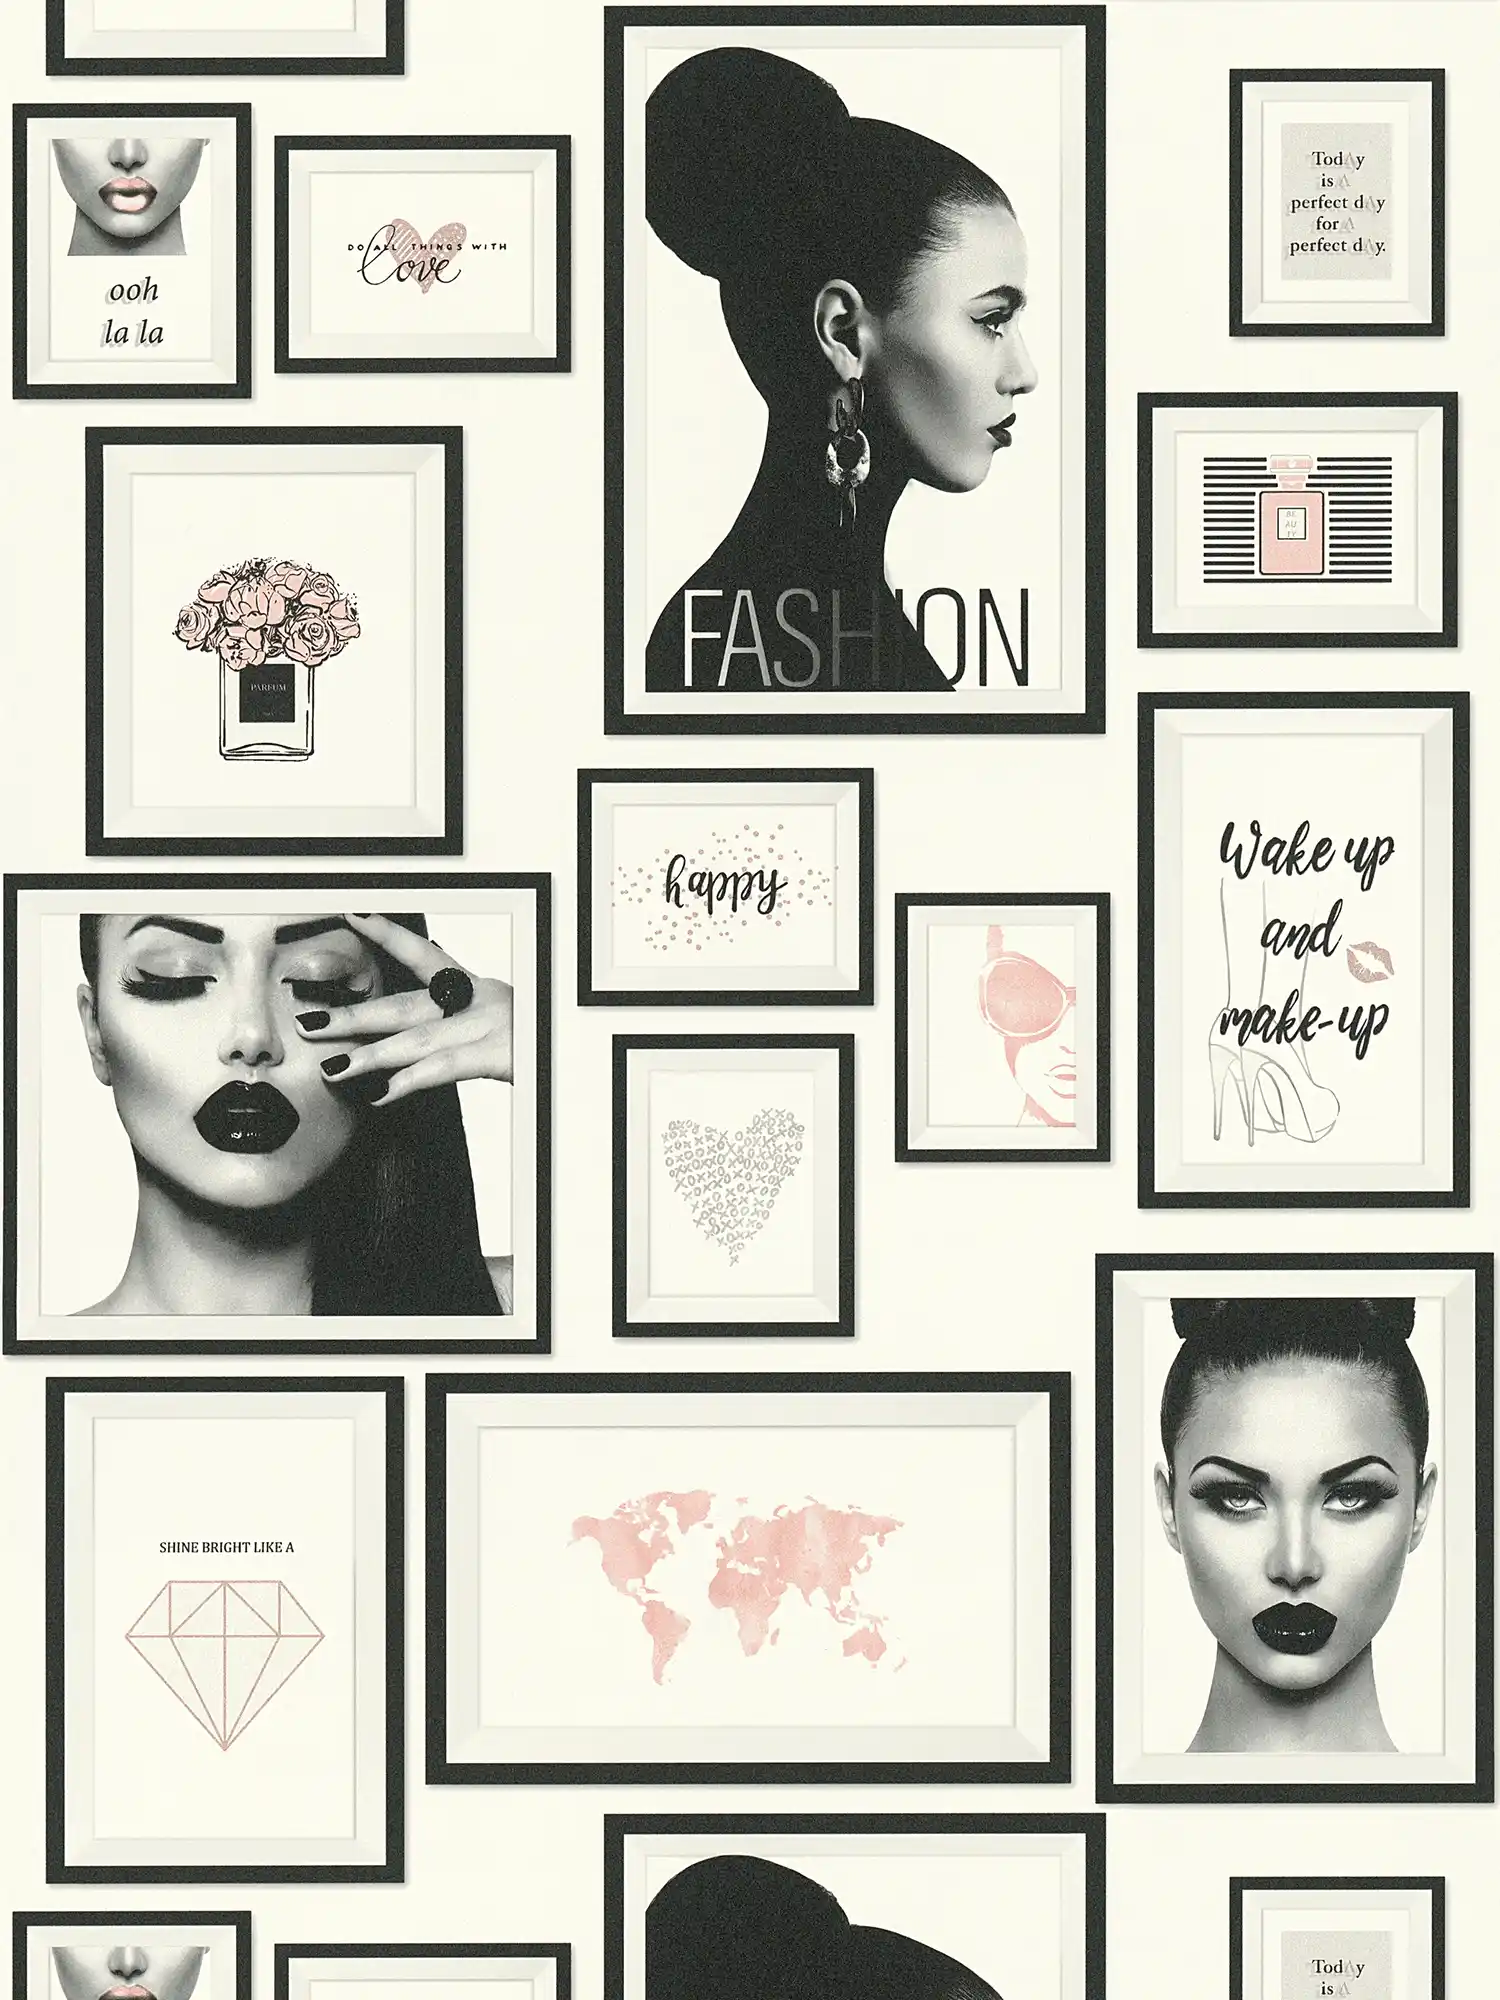 Wallpaper Fashion Design with wall decor - black, white, grey, pink
